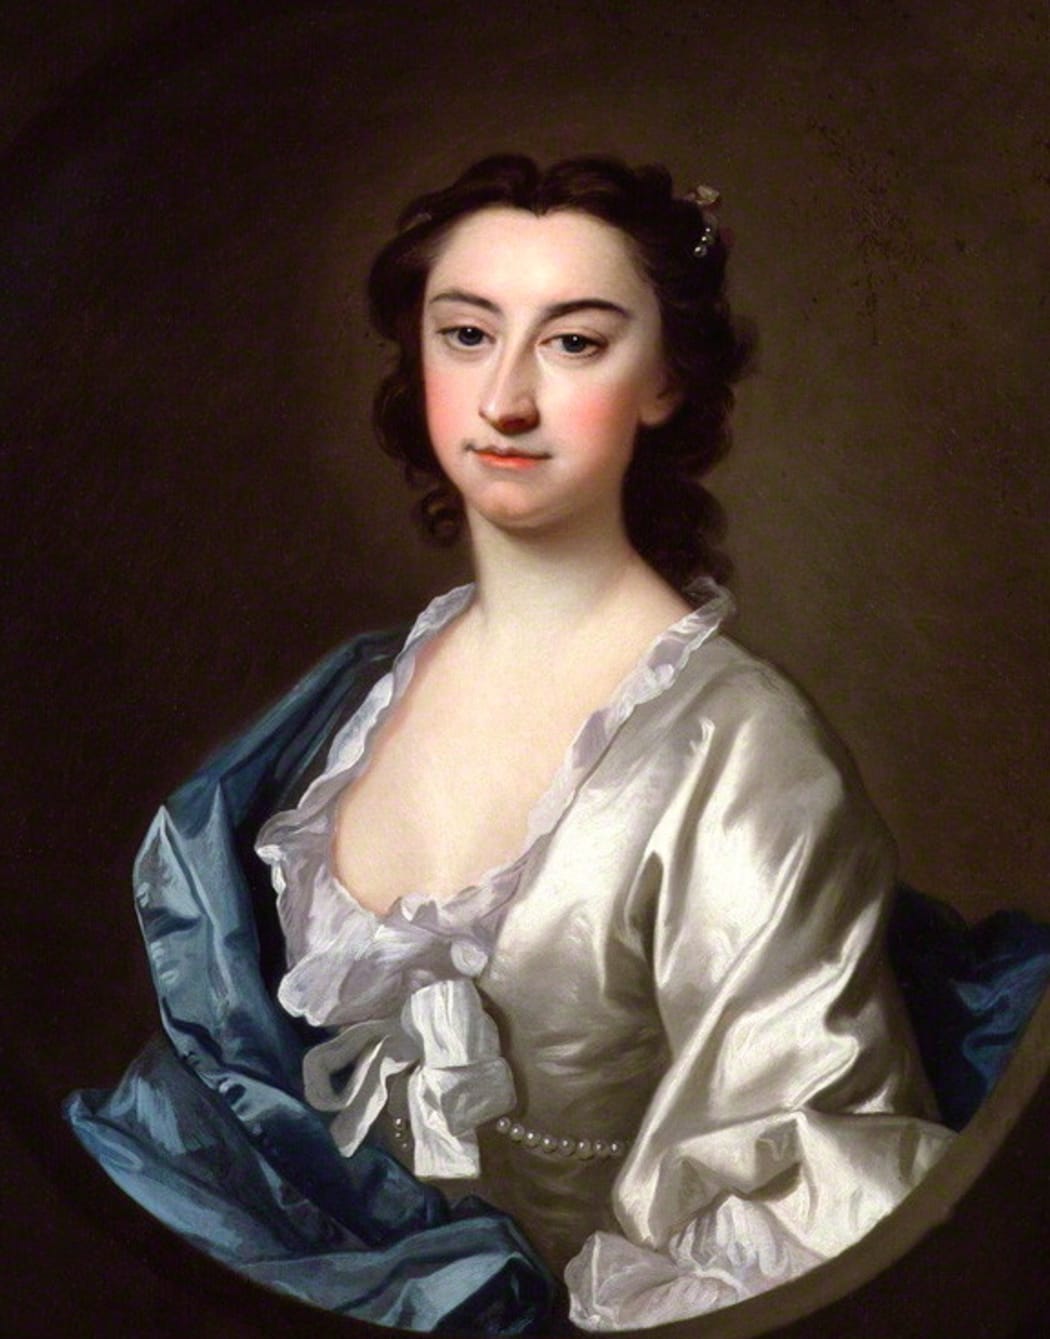 Susannah Maria Cibber, alto soloist and star of the Dublin ‘Messiah’ in 1742